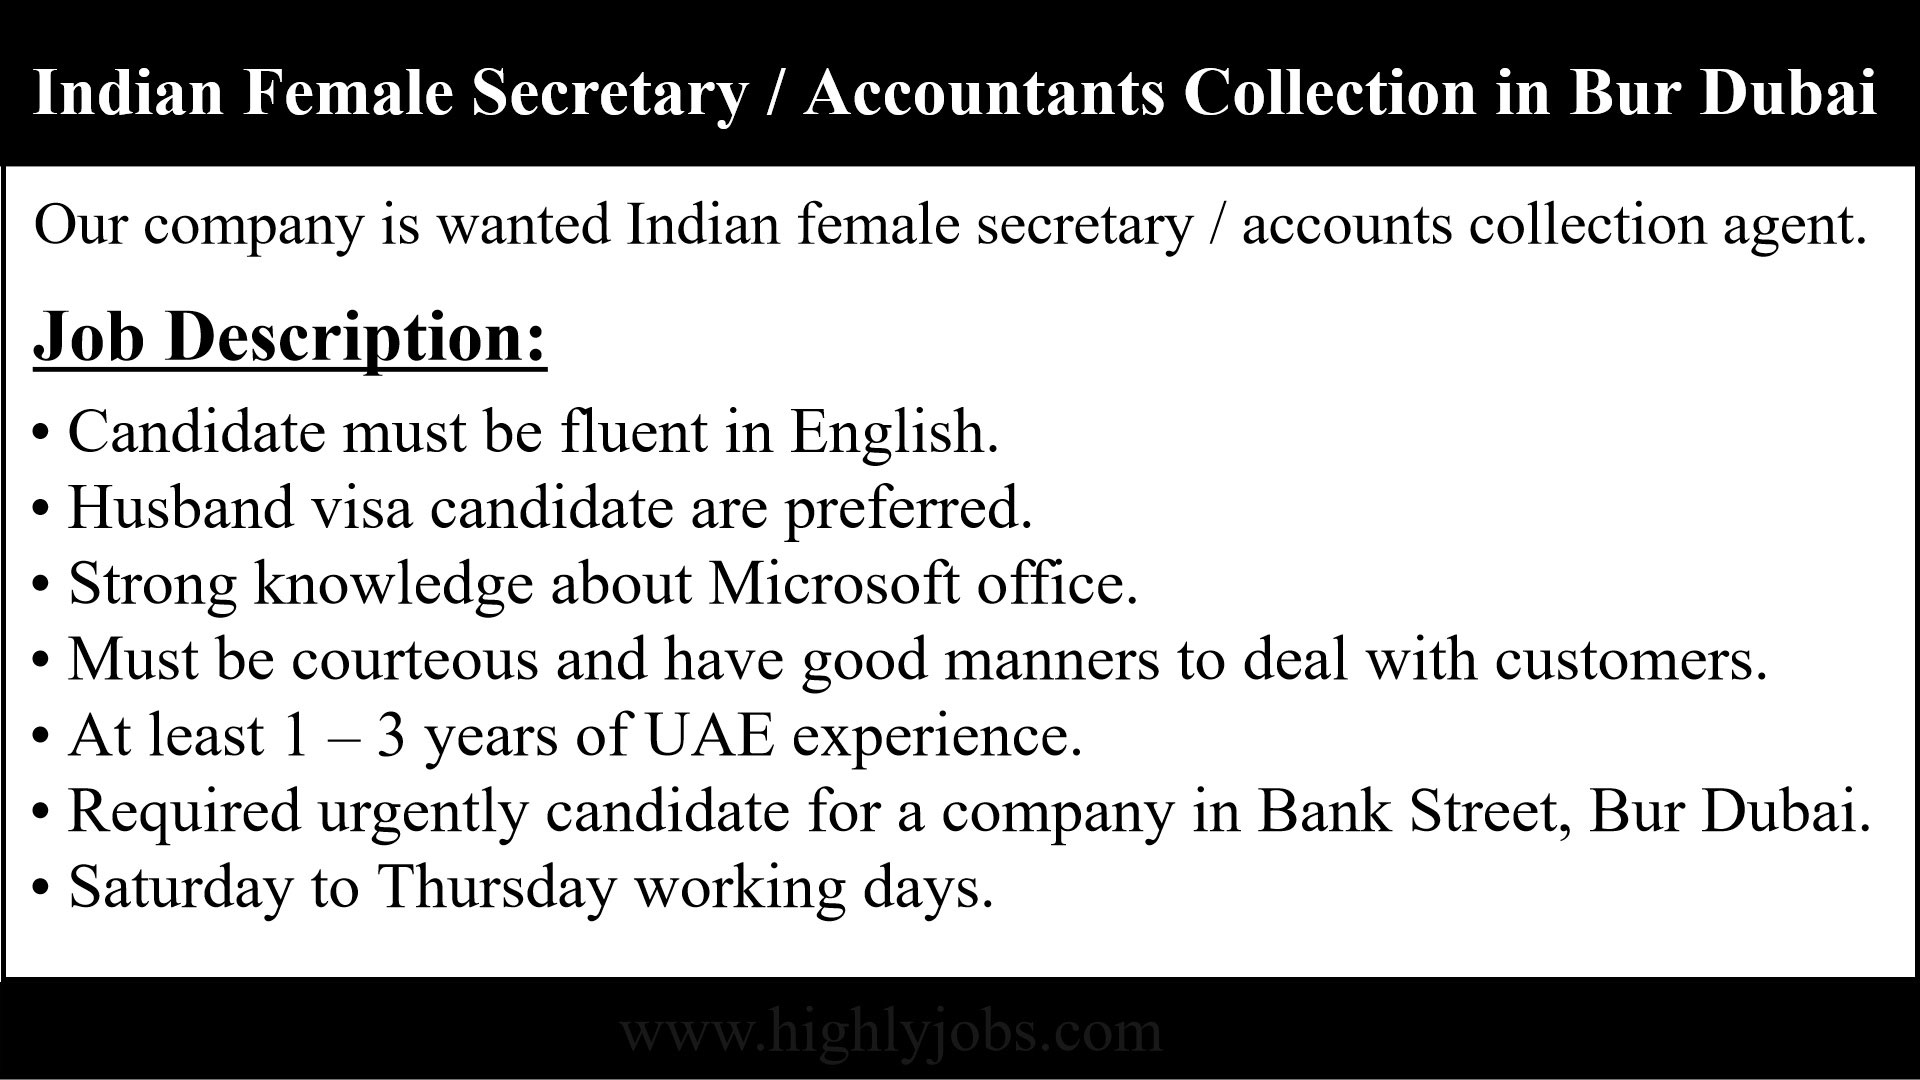 Indian Female Secretary cum Accountants Collection Job in Bur Dubai